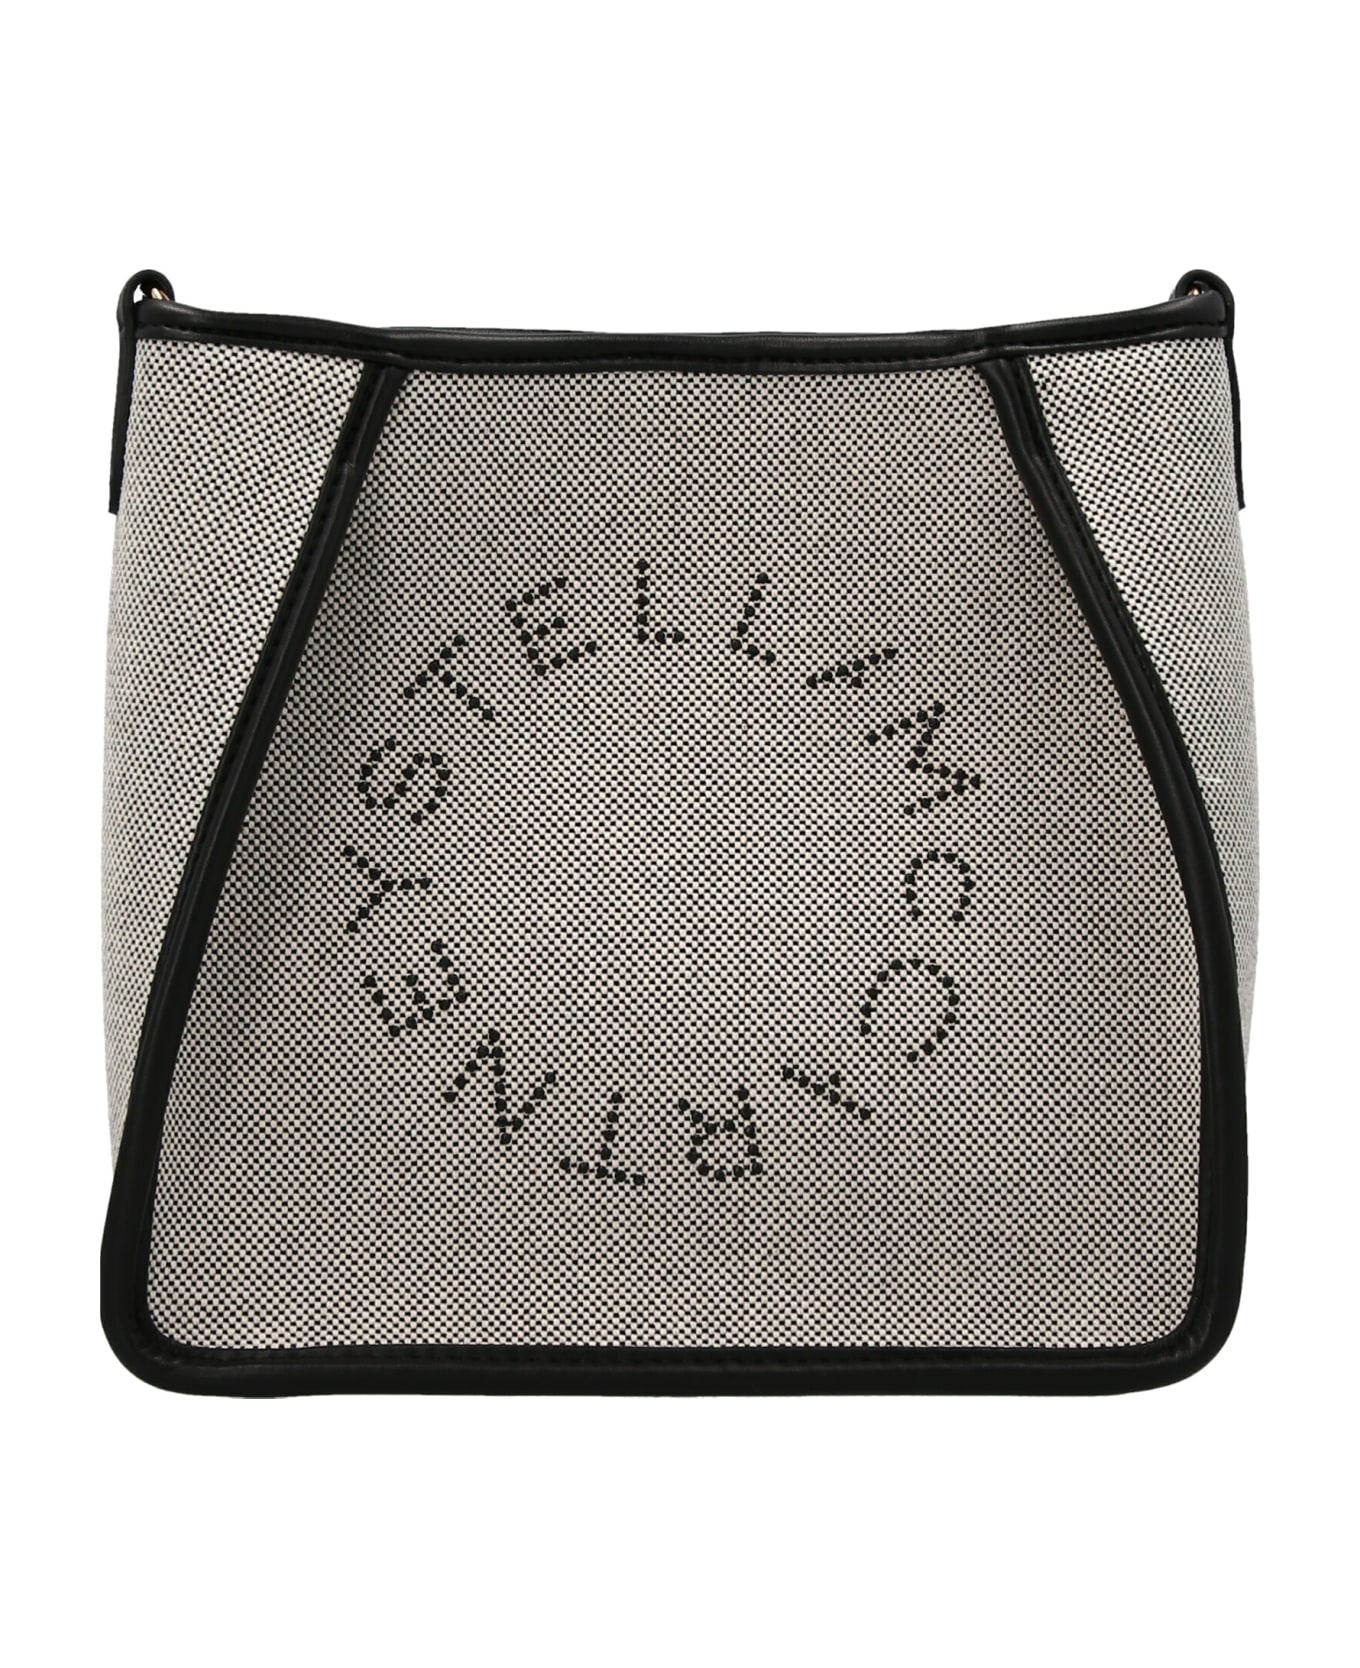 Stella McCartney Cross Body Bag - Black